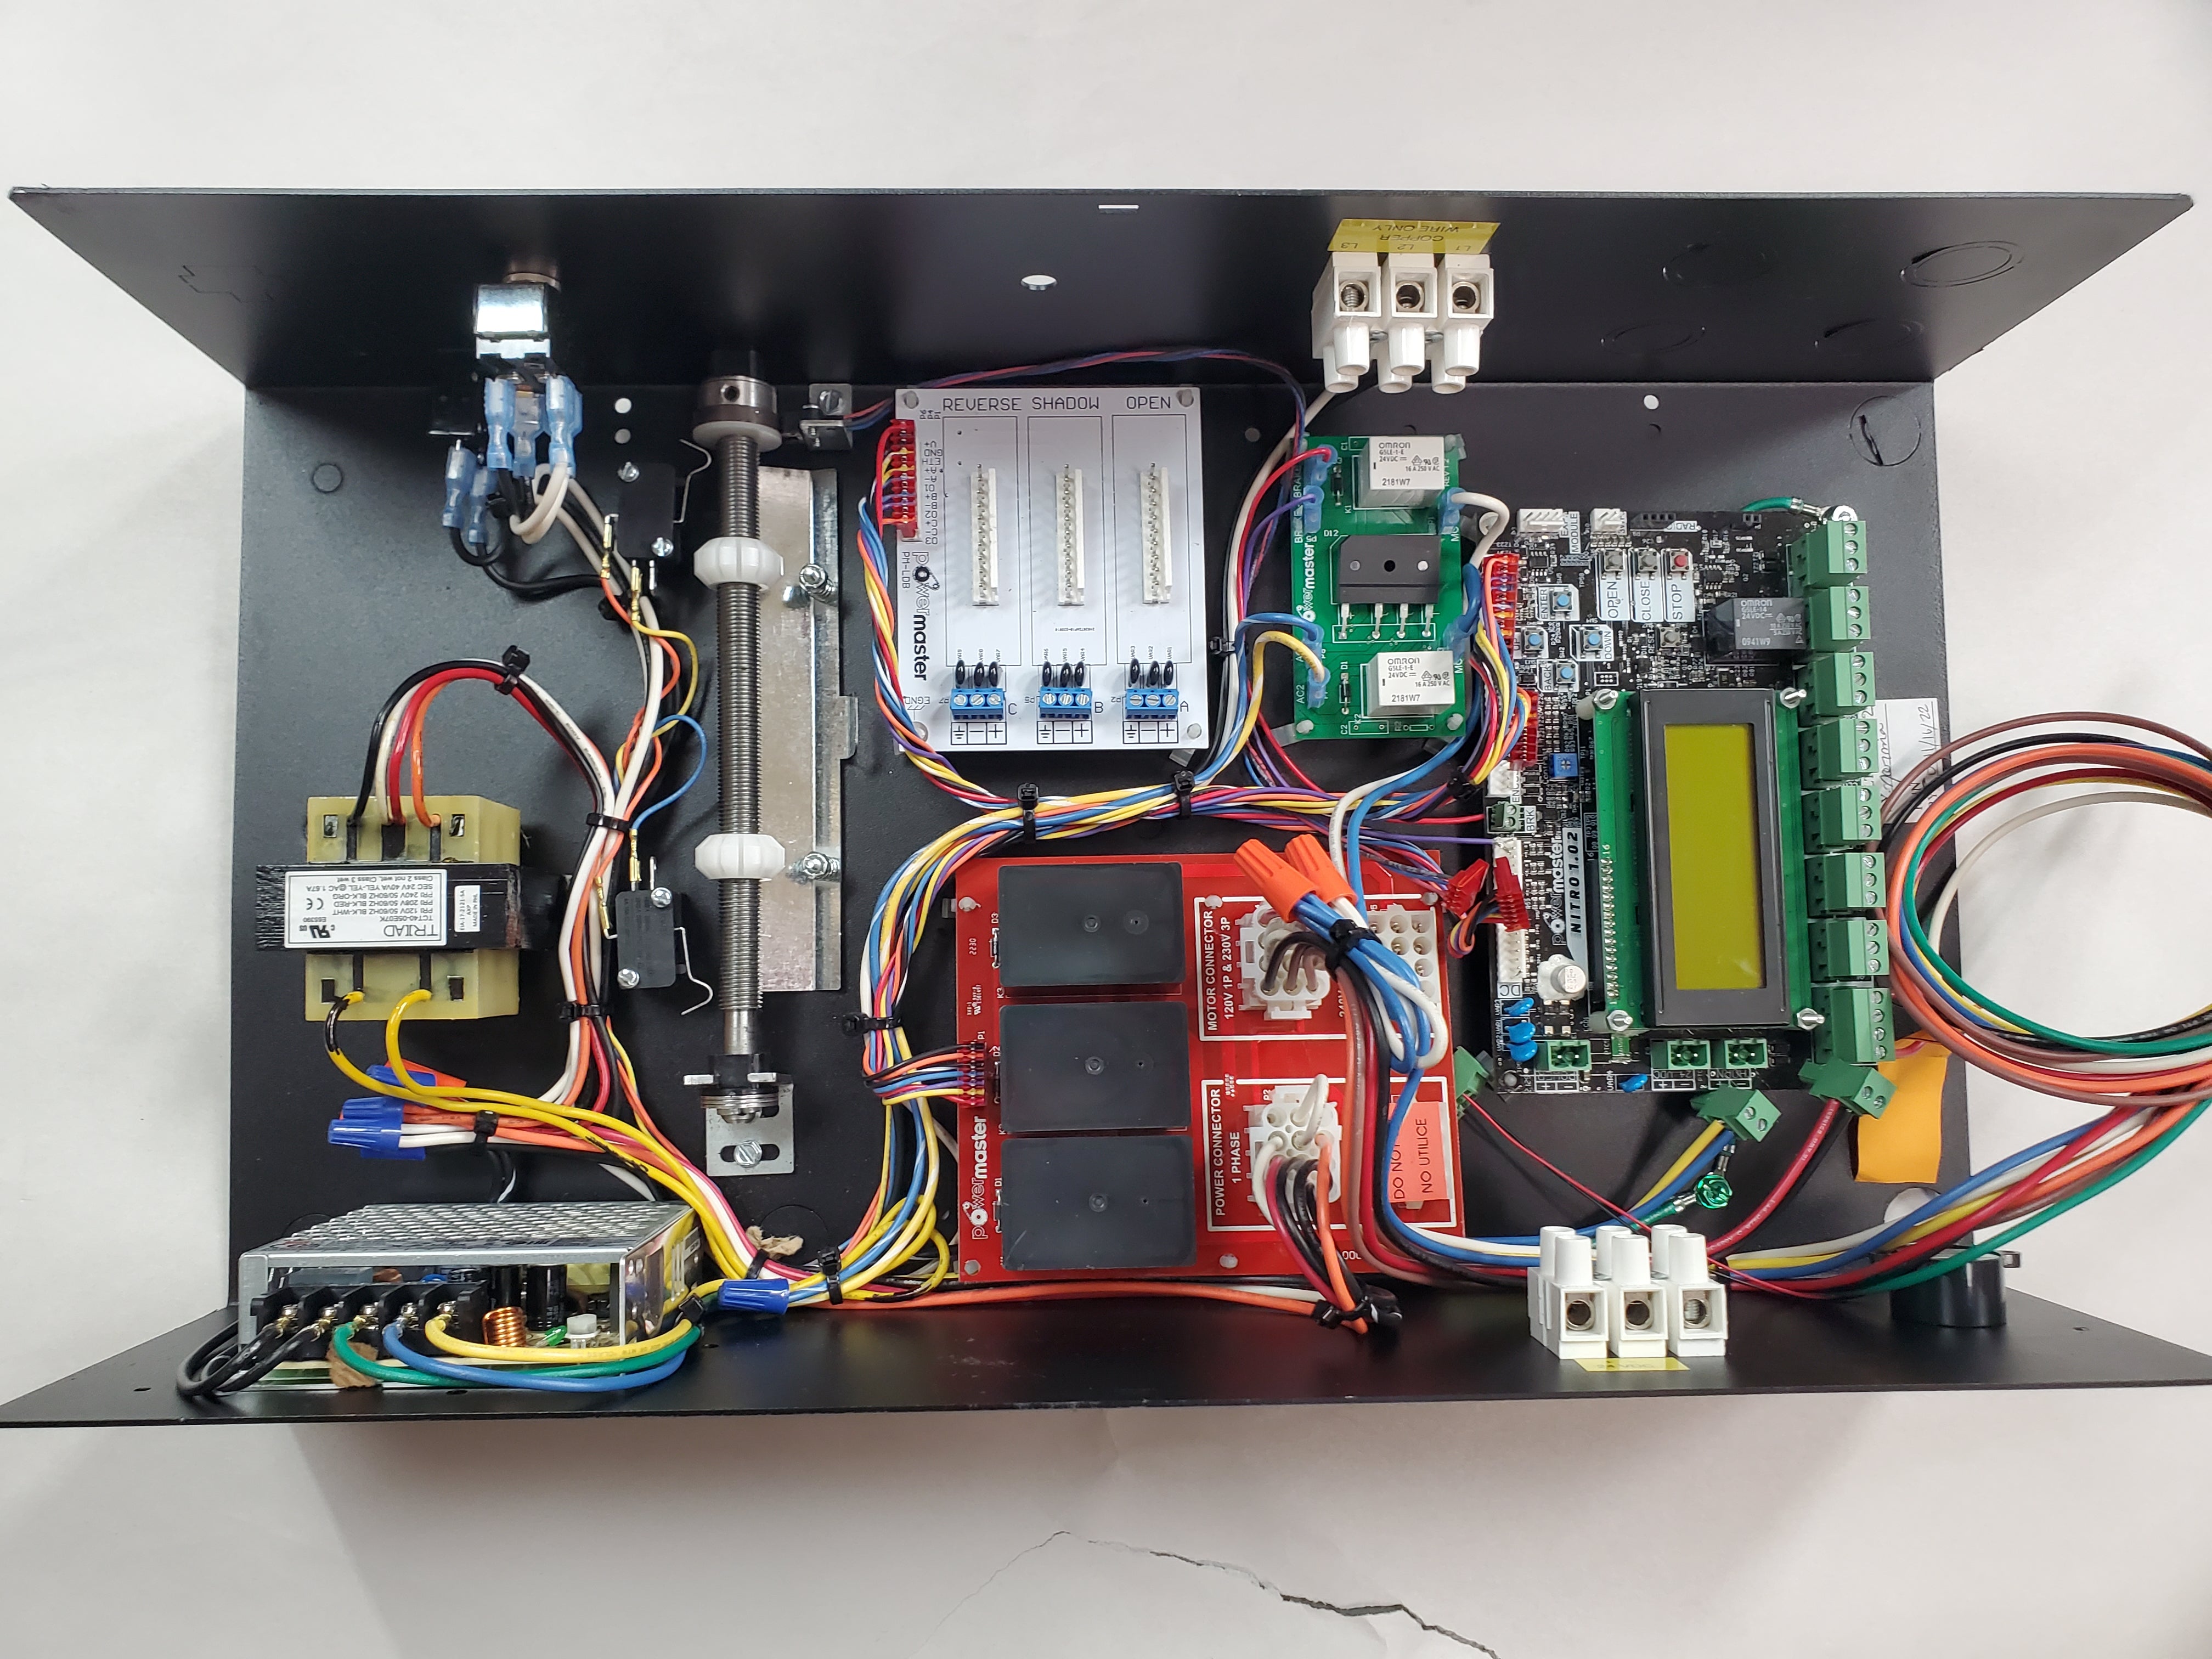 PowerMaster UMCB01 Circuit Board ***Discontinued - Replaced w/ Nitro Control Board Electrical Retrofit Kit***